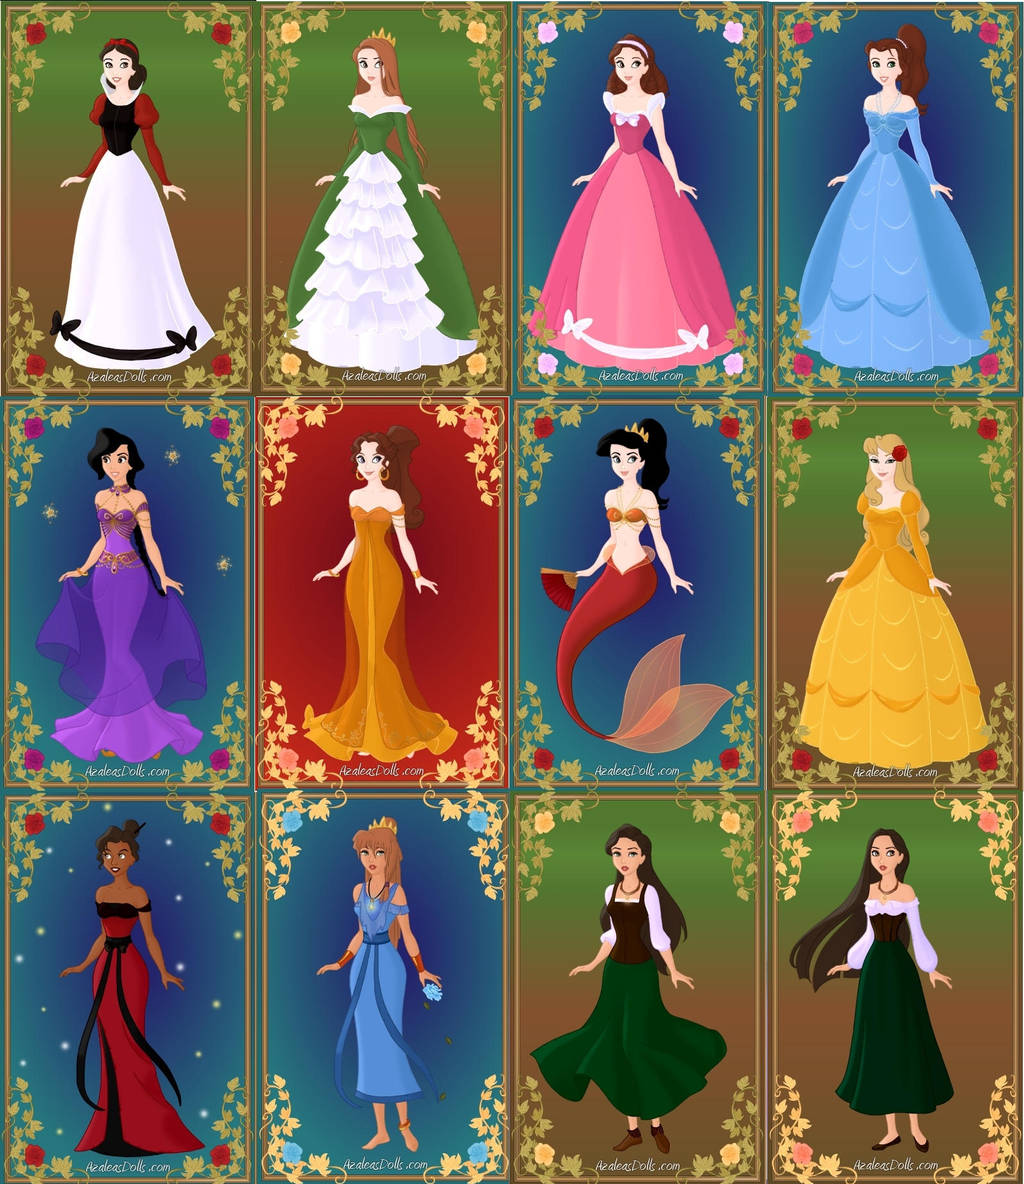 Royal Disney Daughters by OLISITA on DeviantArt